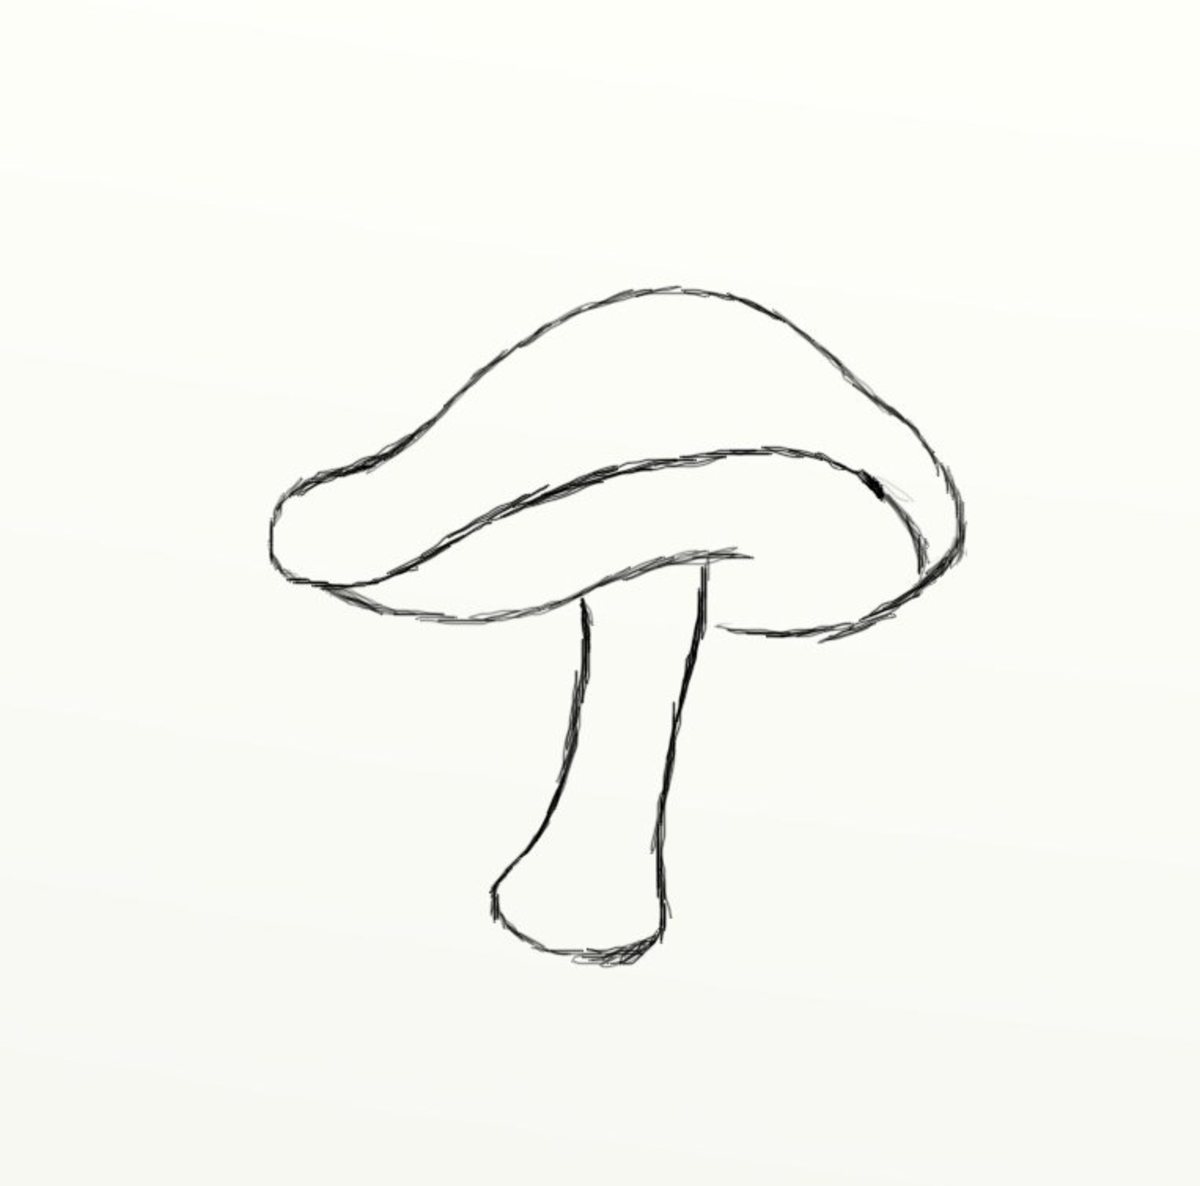 how to draw a mushroom